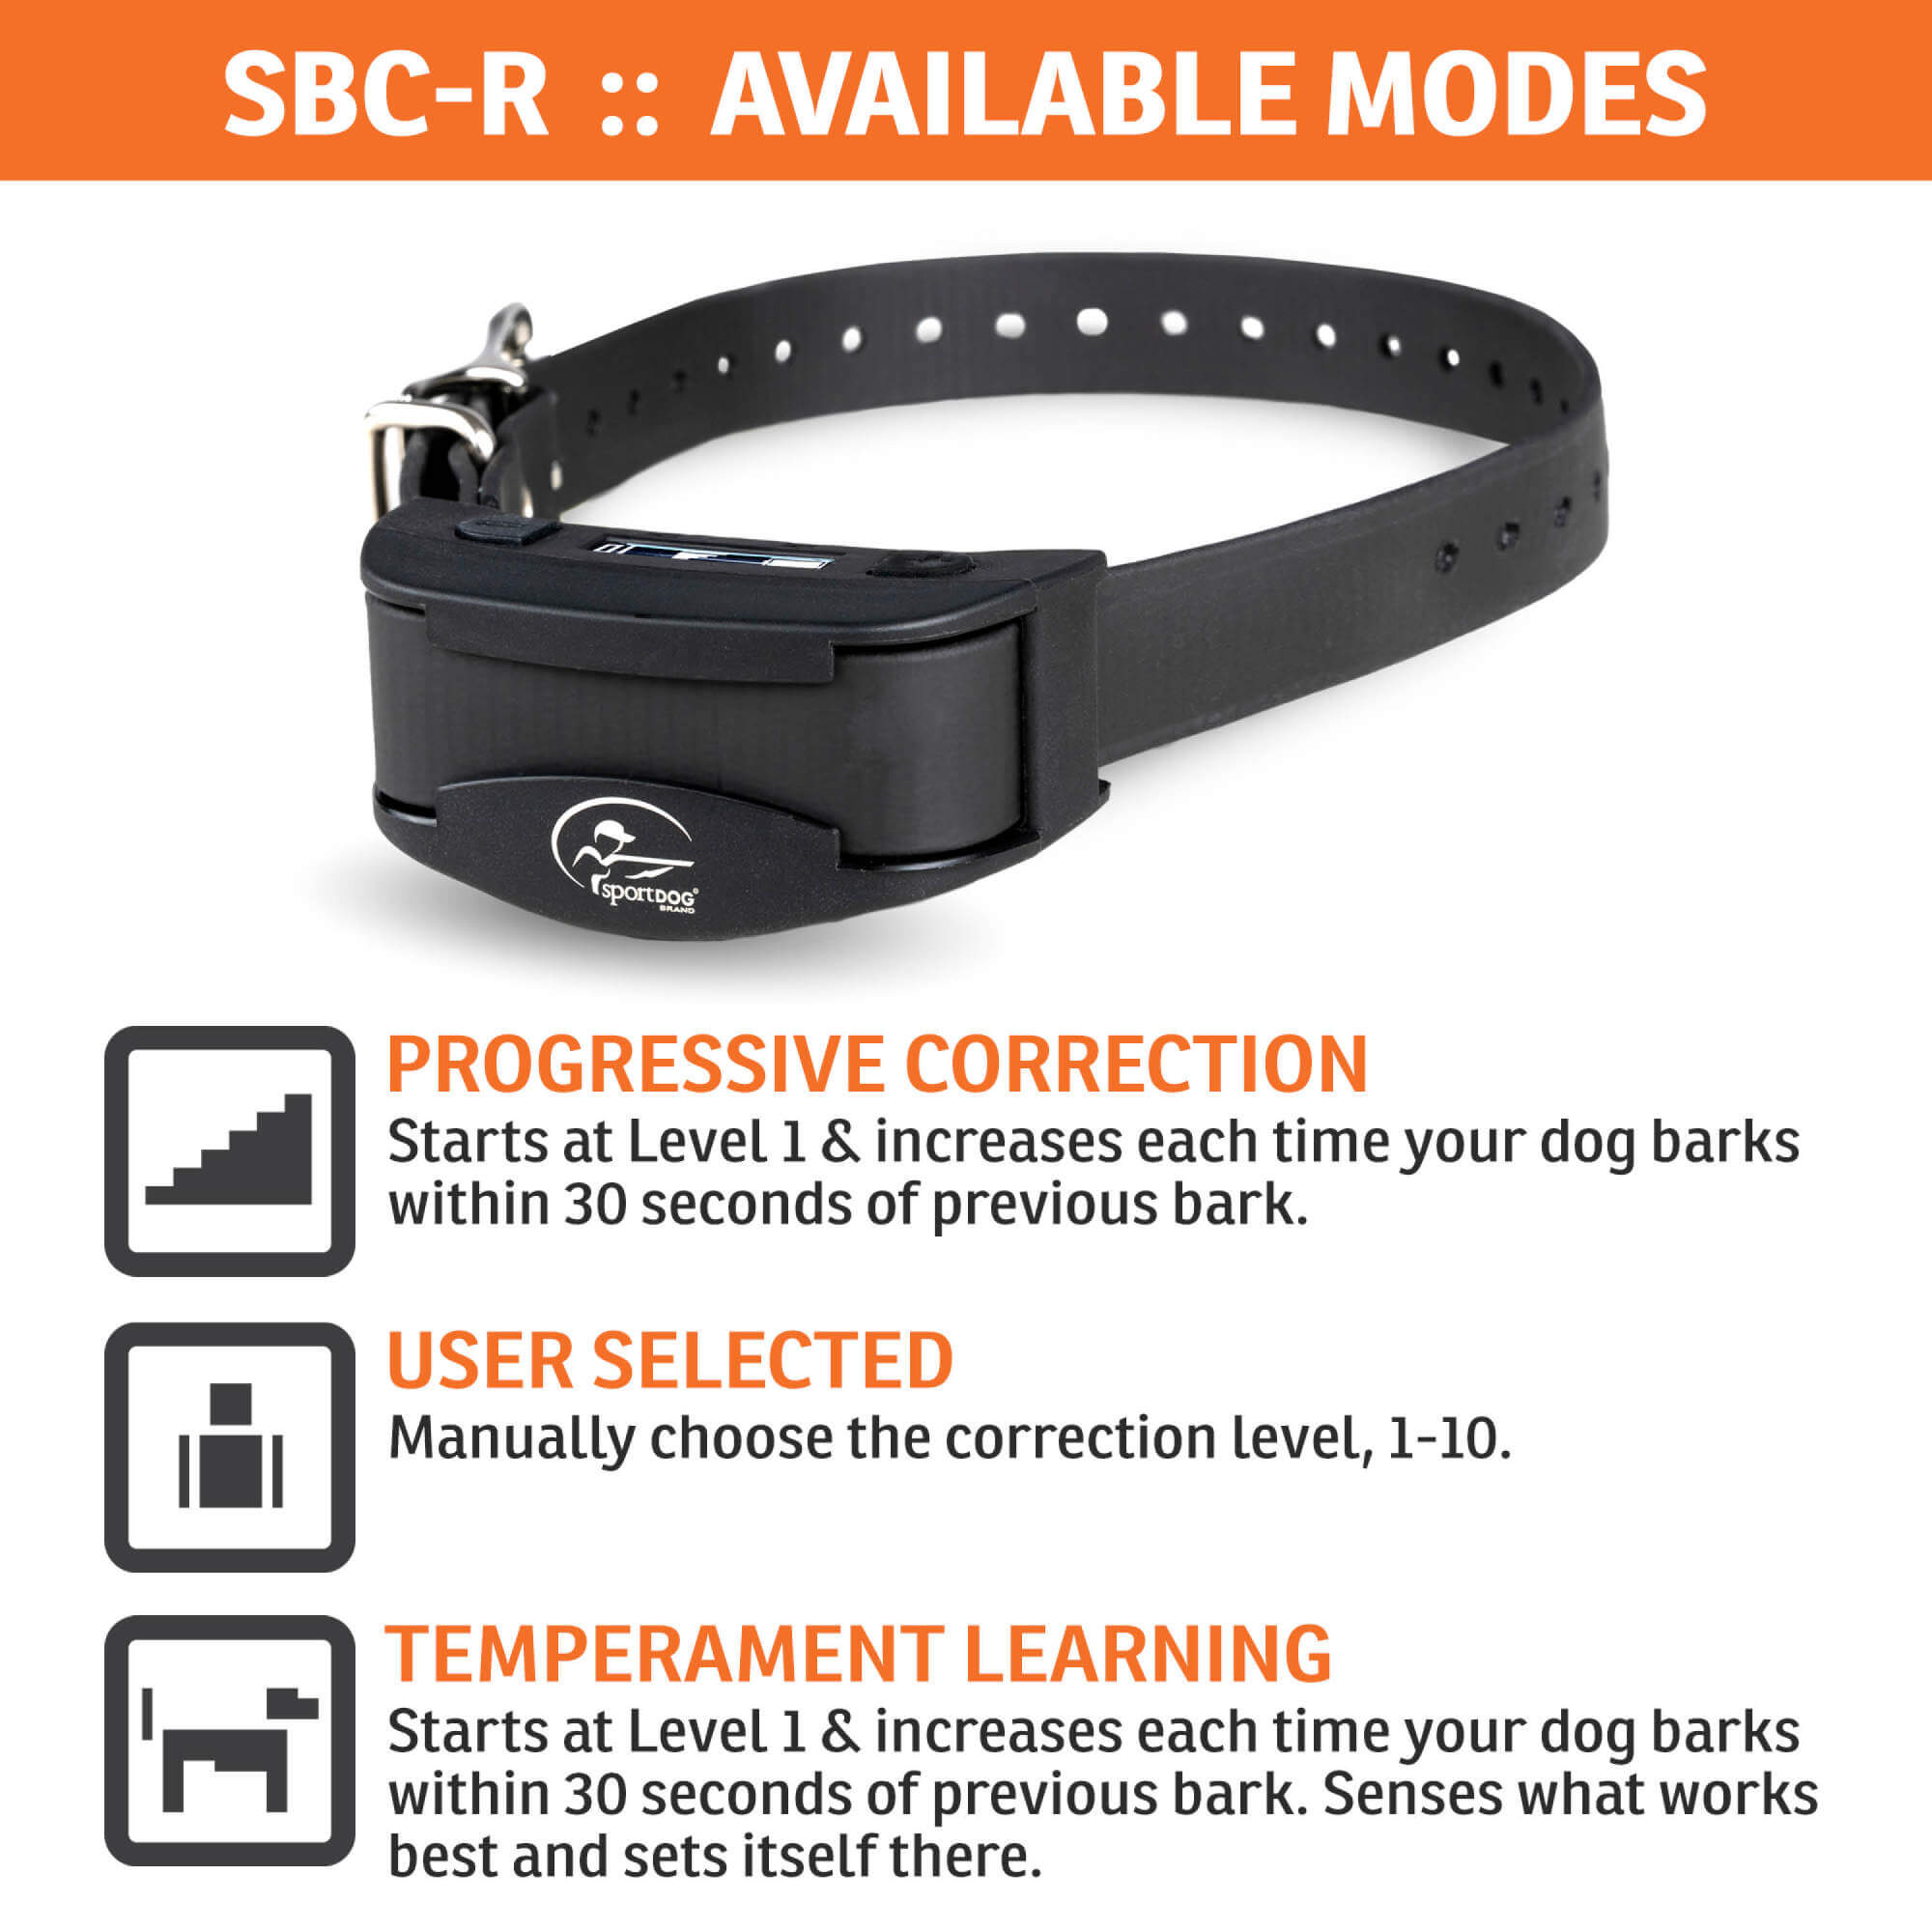 Sport Dog Collar SBC-R available modes progressive correction